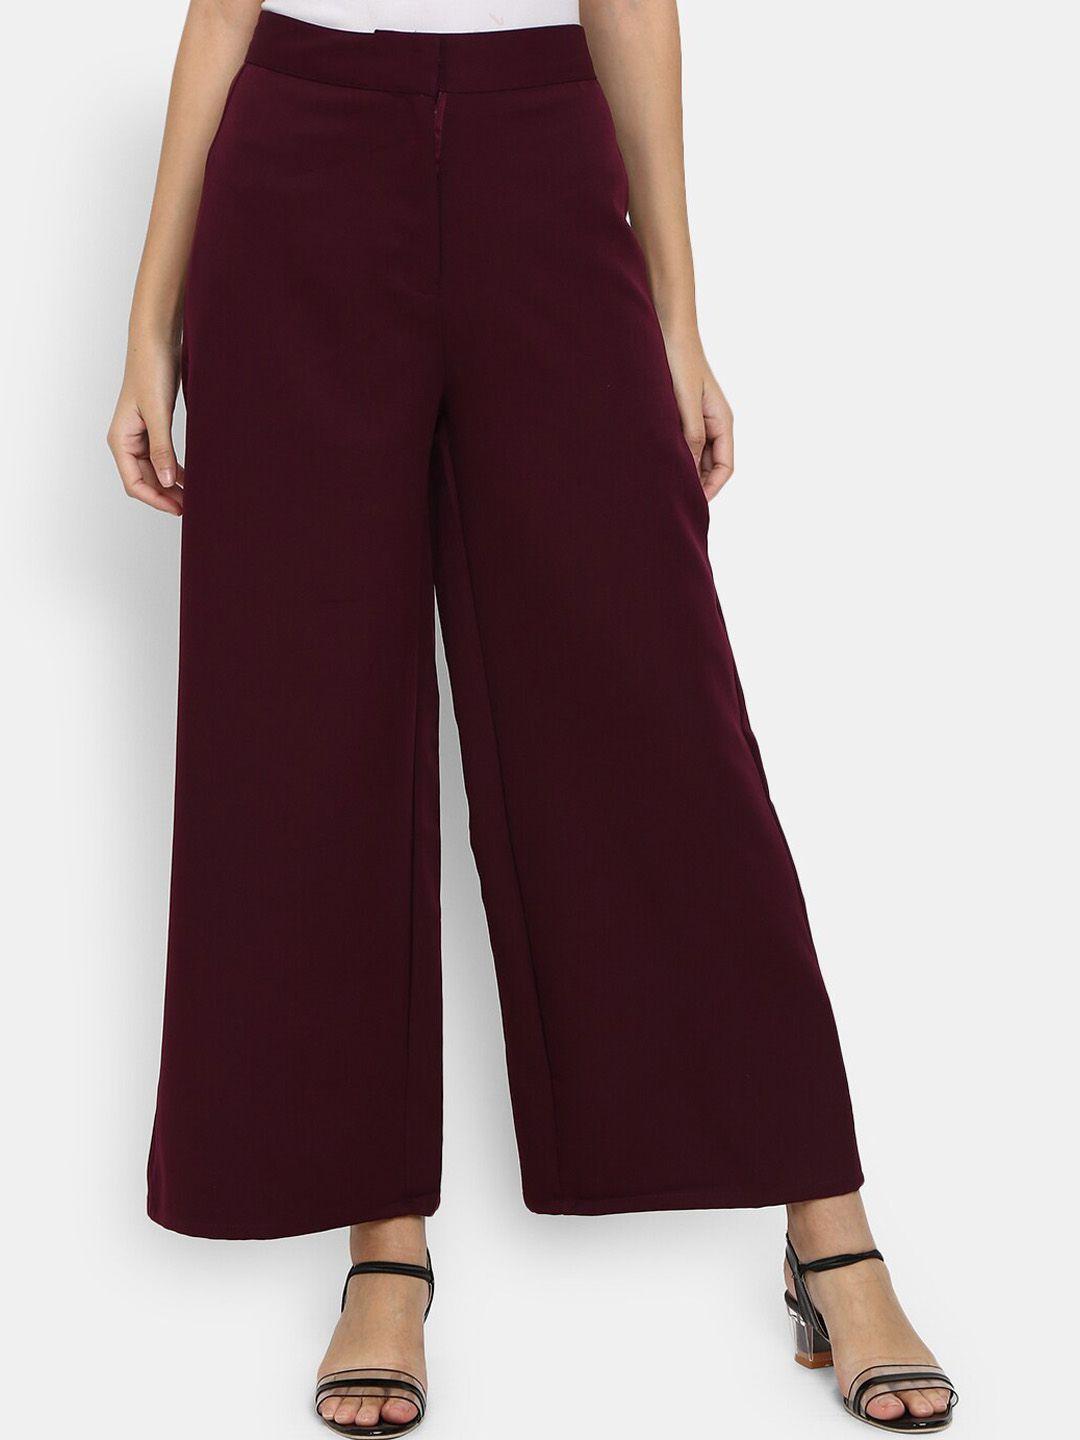 v-mart women maroon regular fit classic trousers